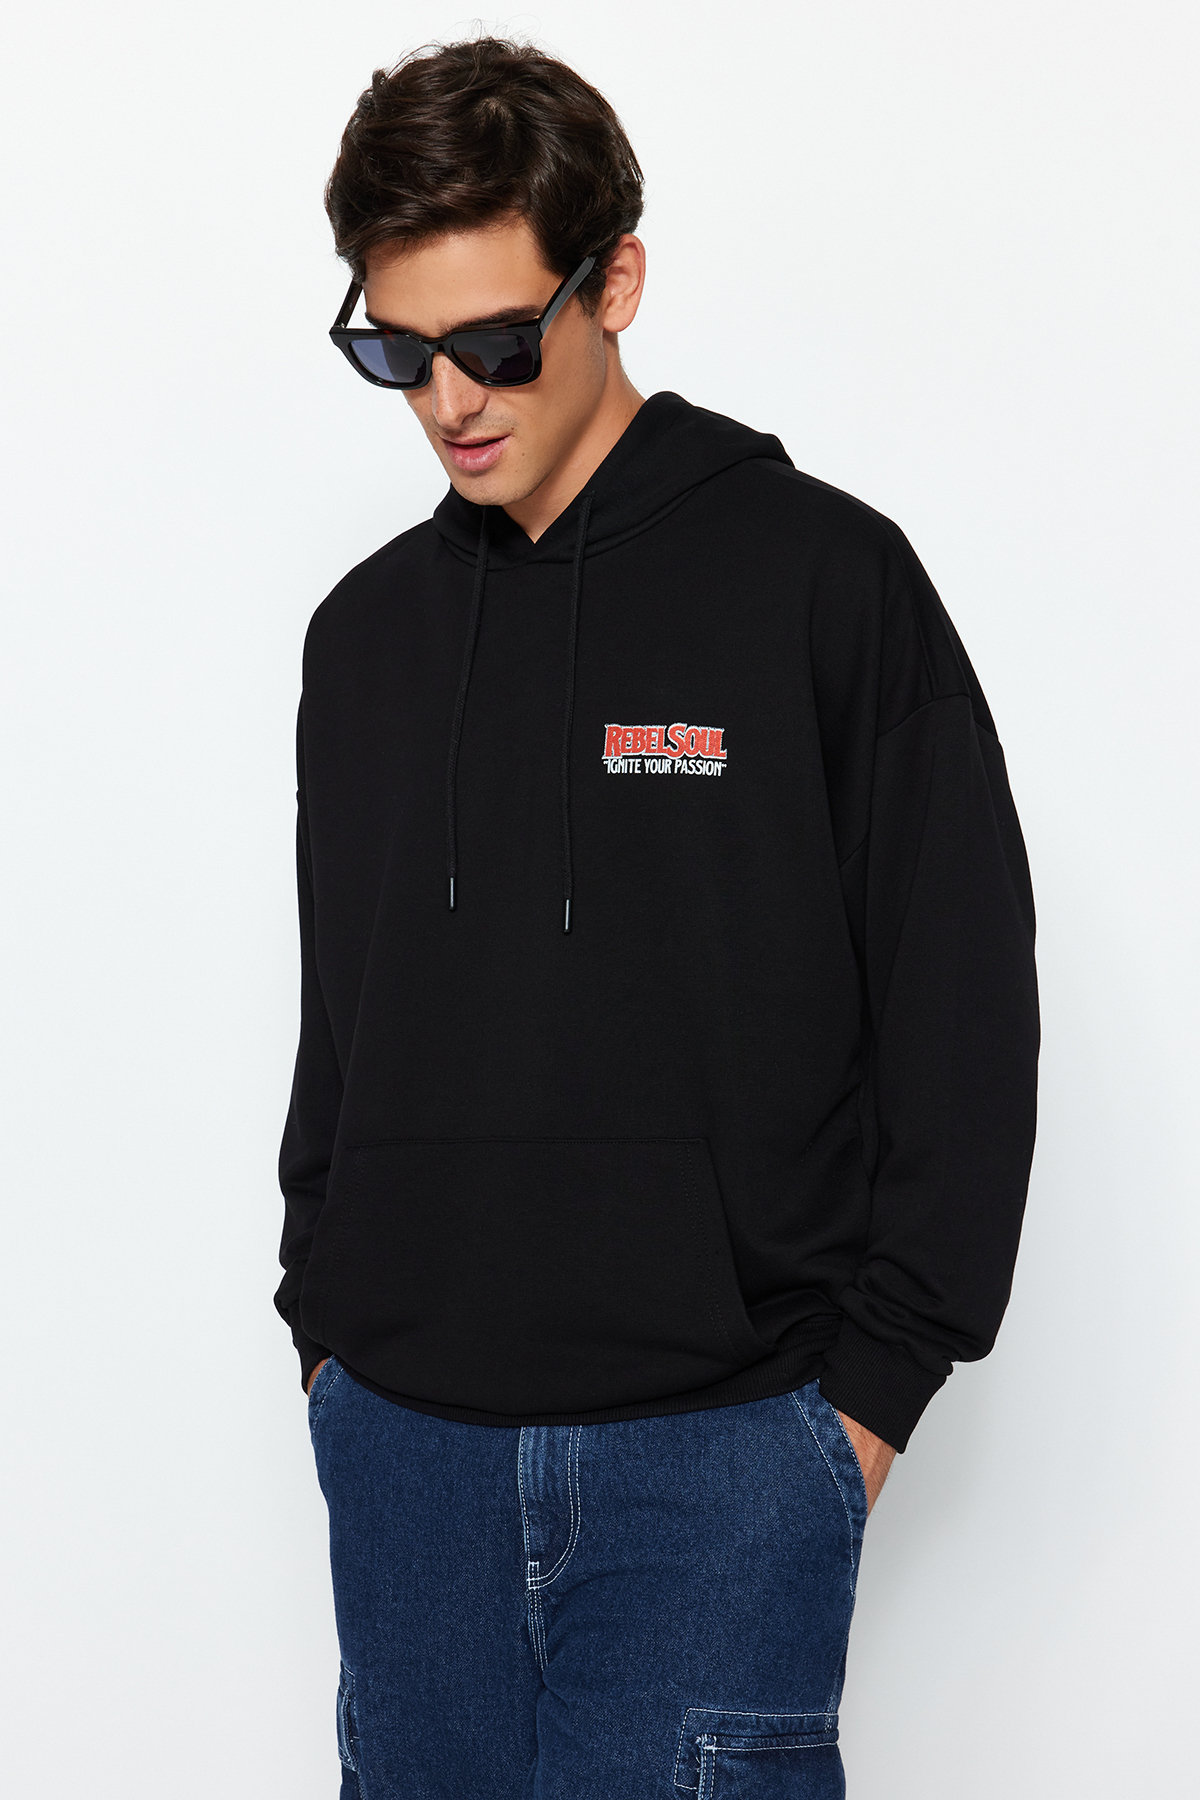 Trendyol Black Men's Oversize/Wide-Cut Hoodie with Rock Music Print Thick Sweatshirt.